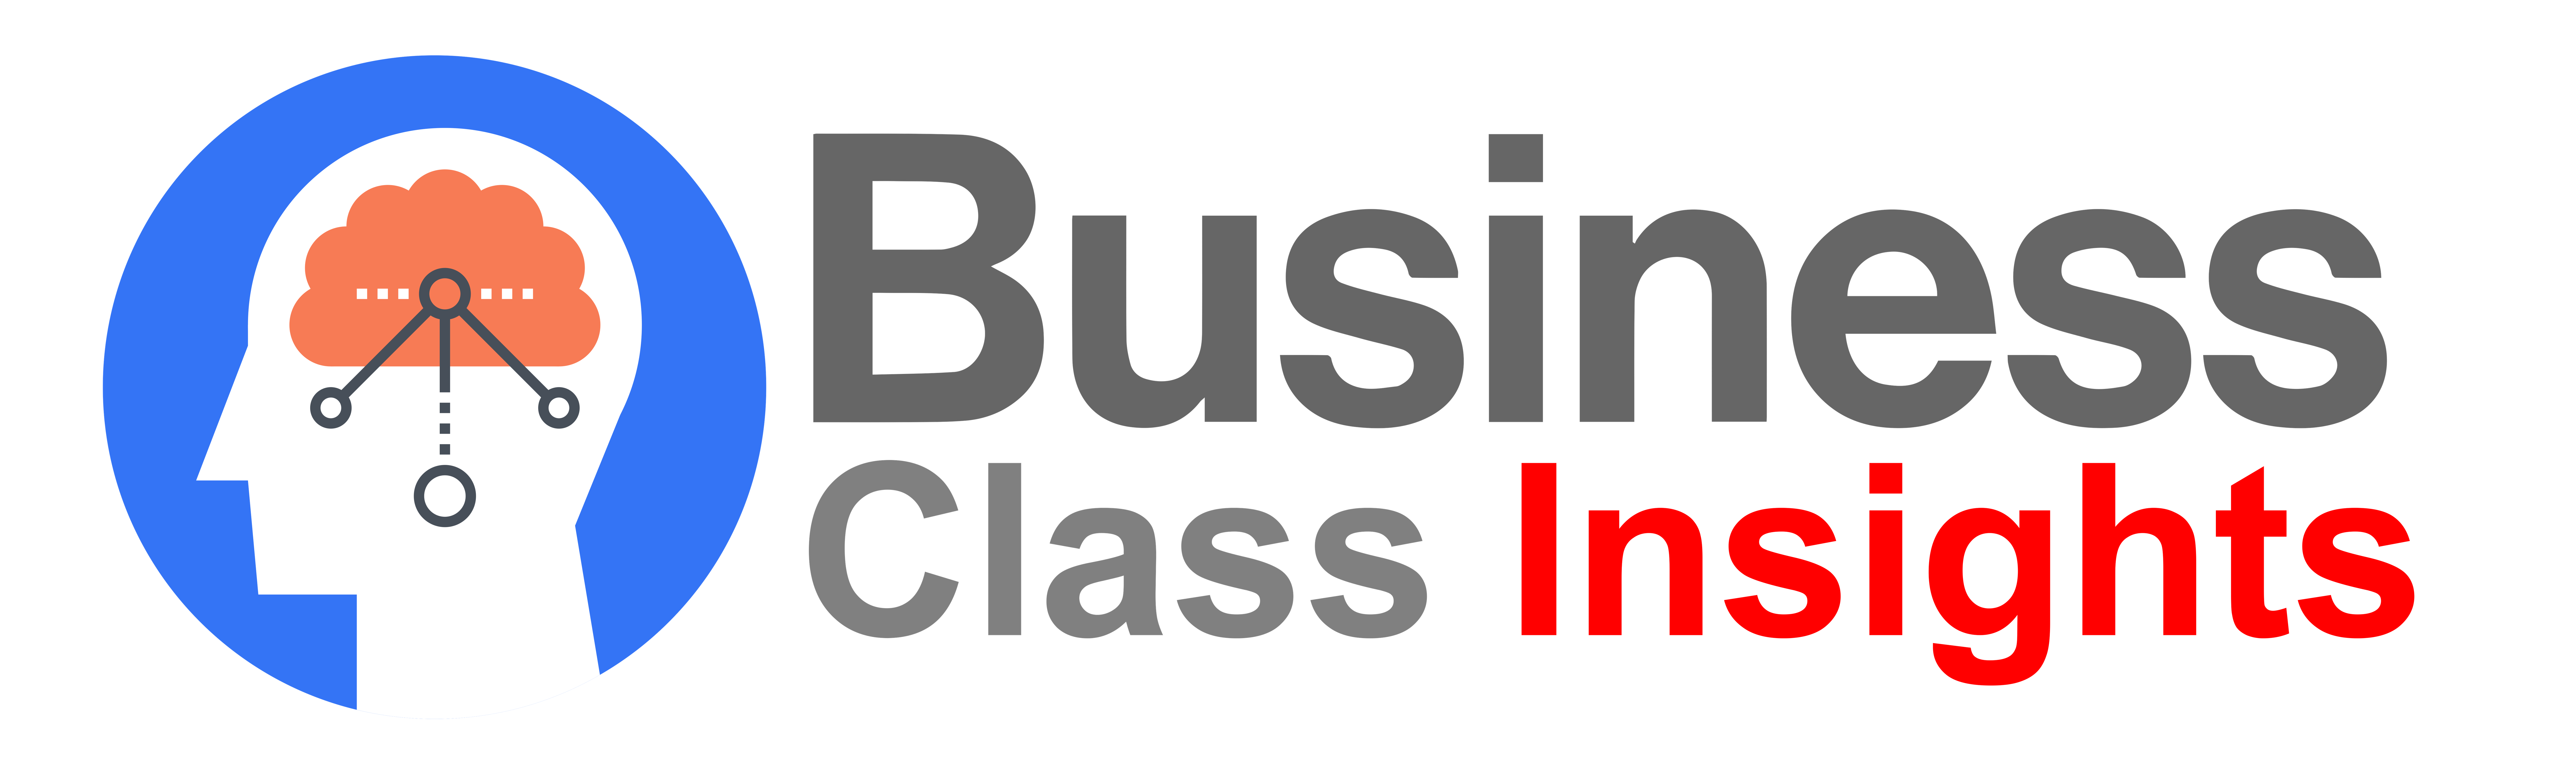 NEW-Business_Class_Insights-Horizontal-Blue-White- V3